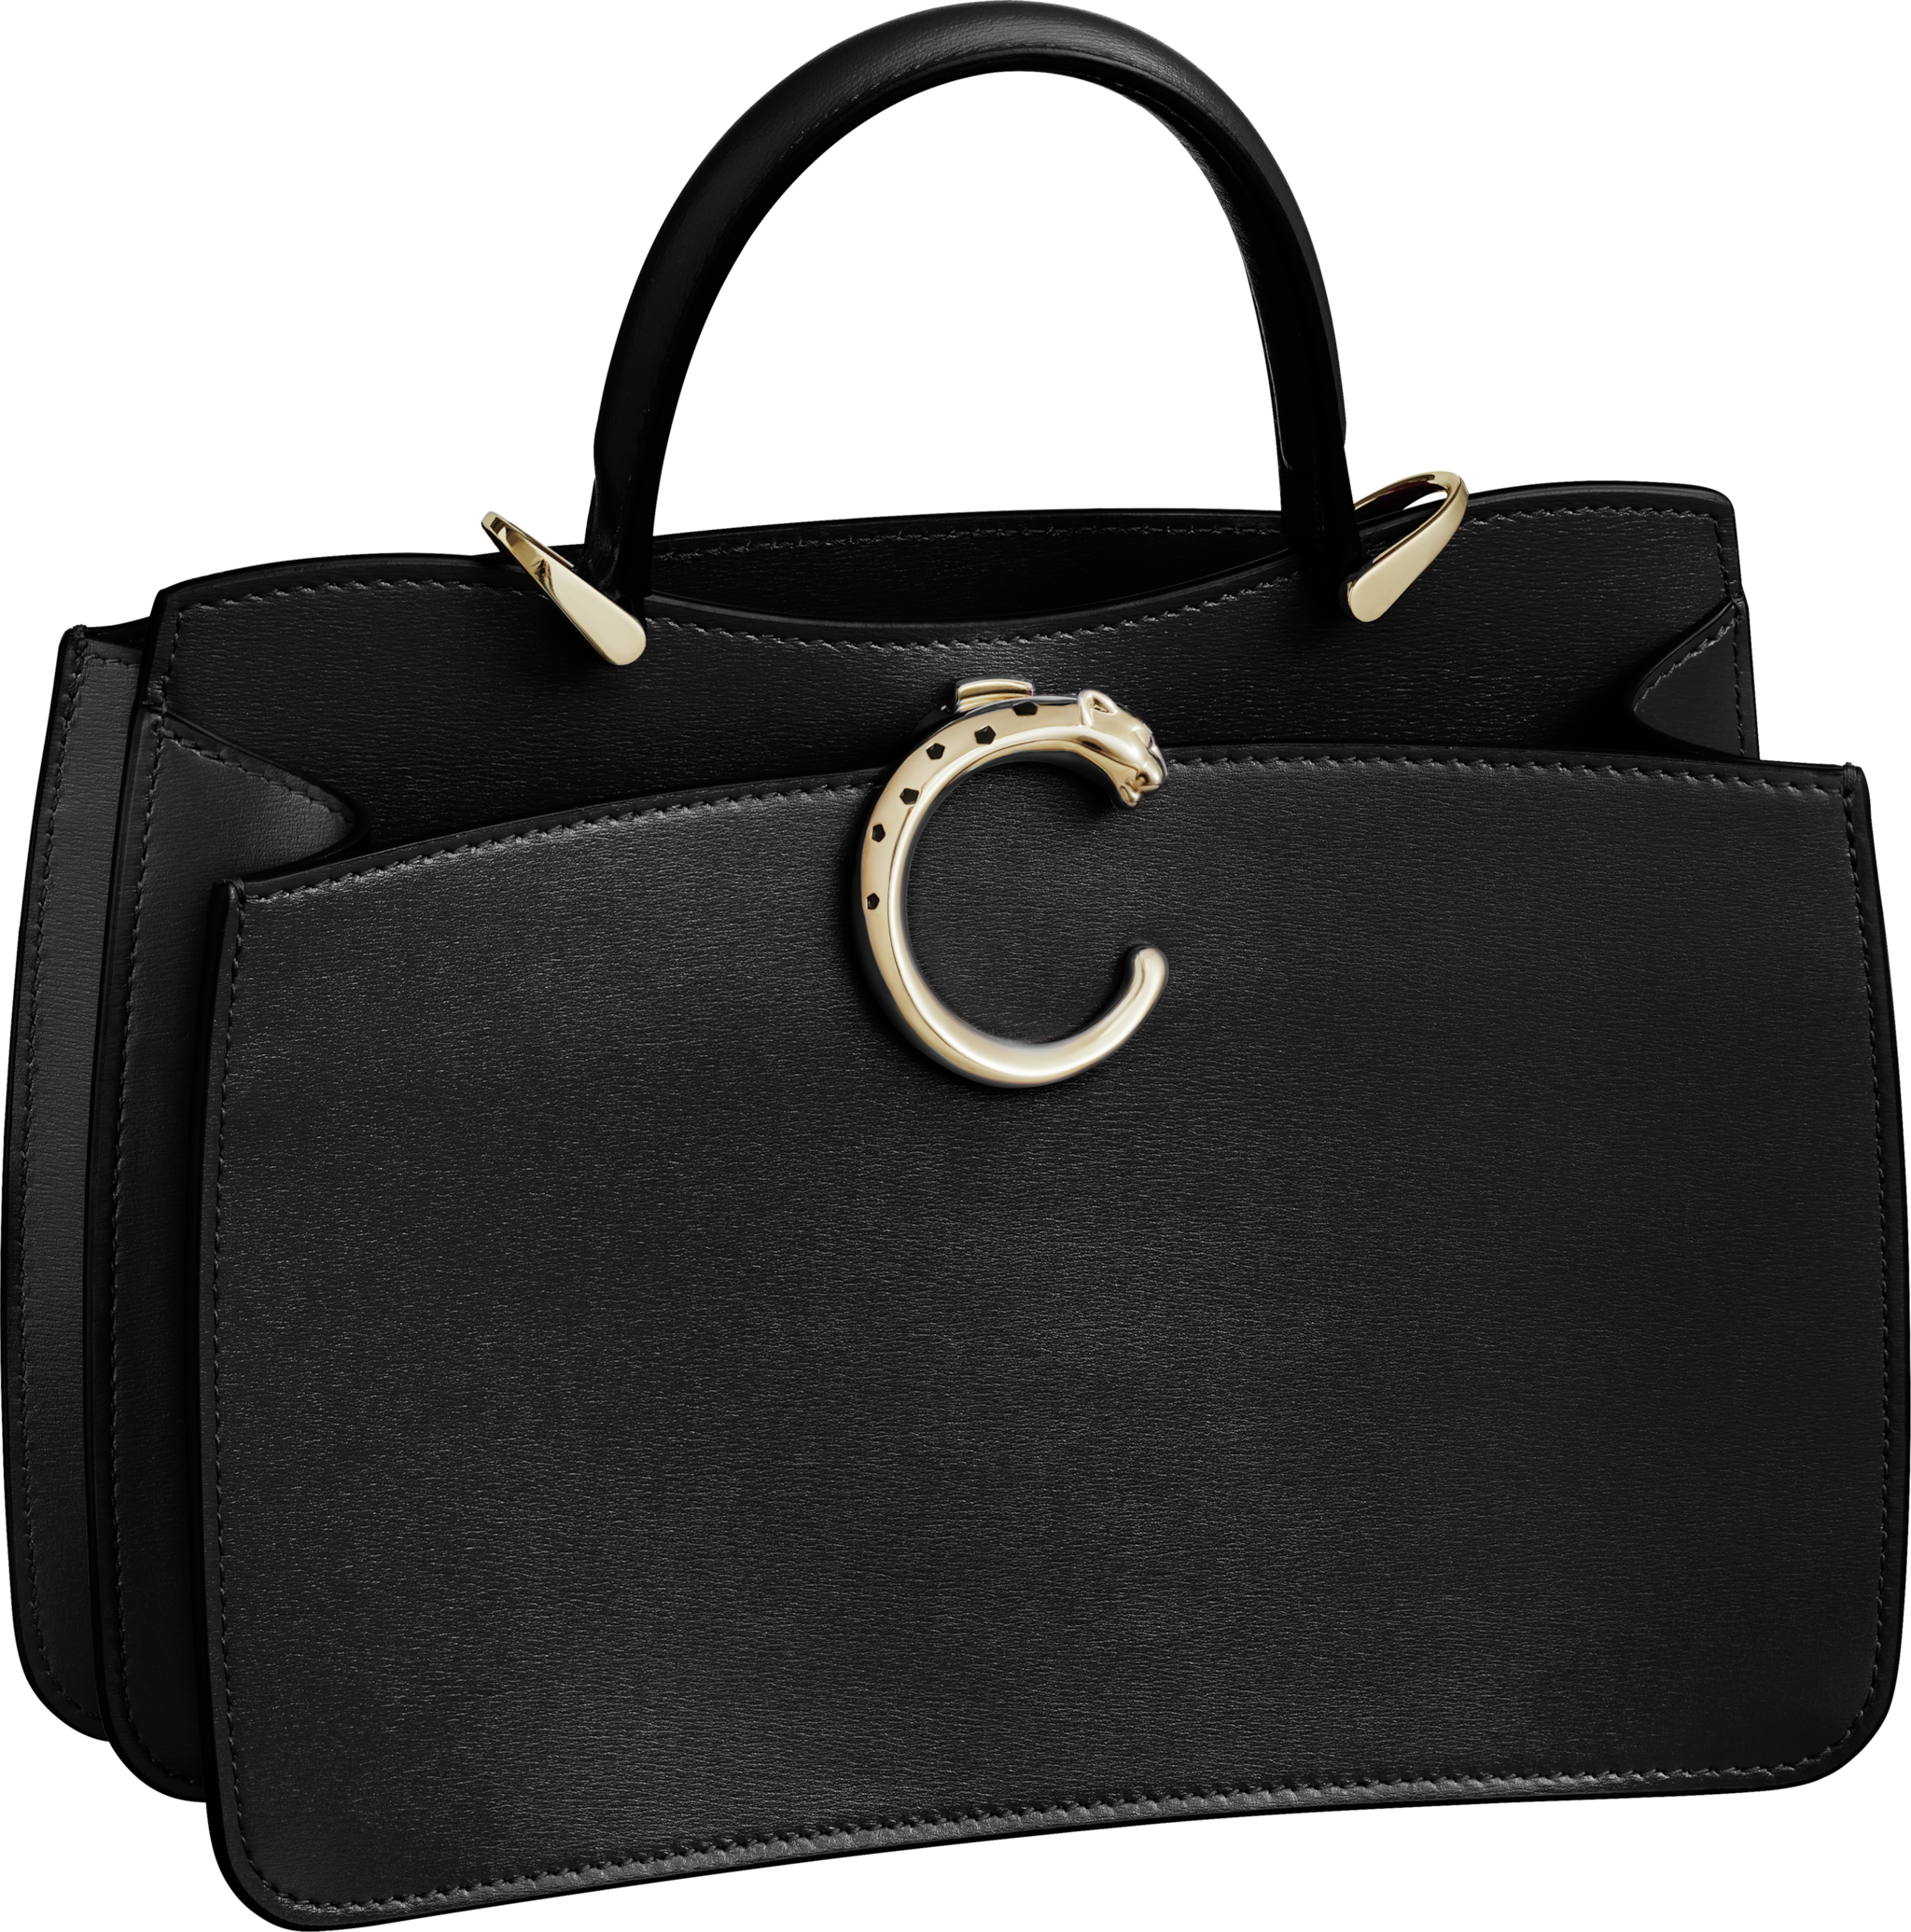 Handle bag mini model, Panthère de CartierBlack calfskin, golden finish